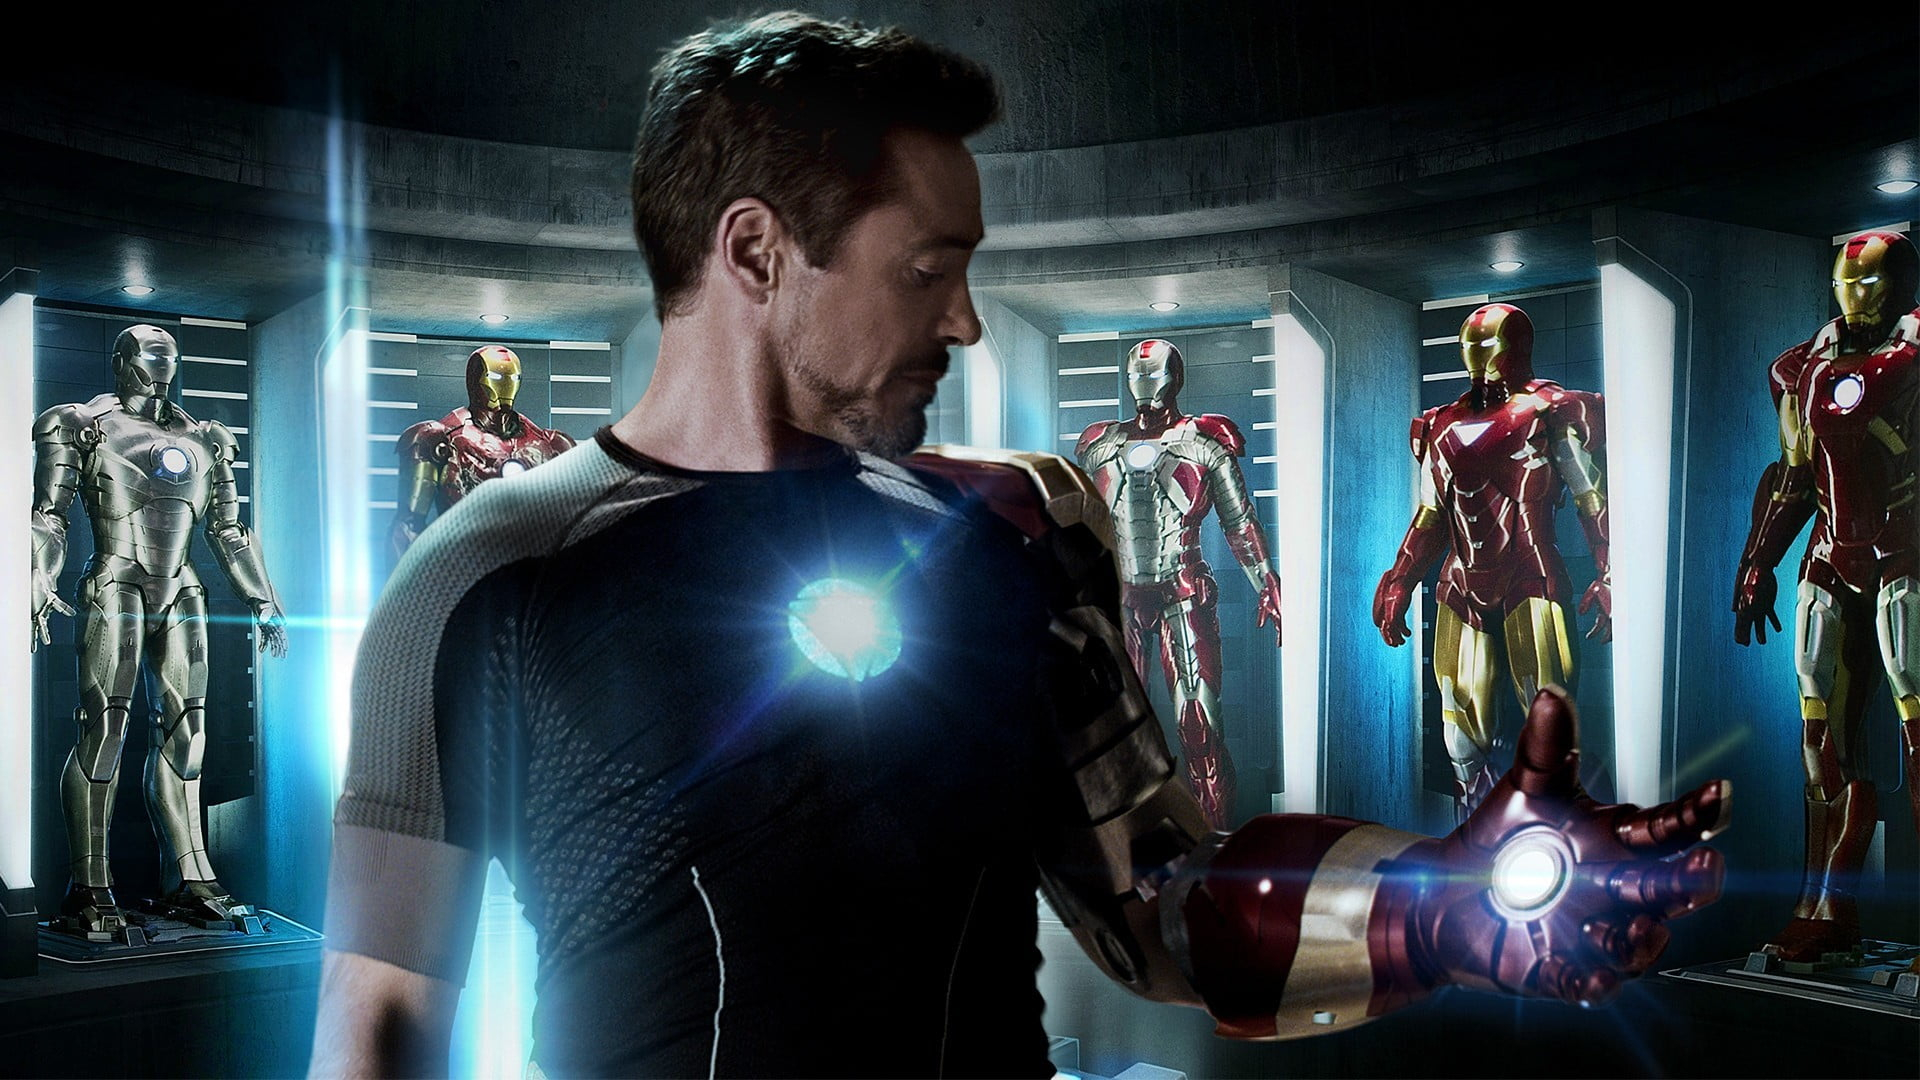 1920x1080 Iron Man movie still, Tony Stark, Iron Man, Iron Man 3, glowing HD wallpaper